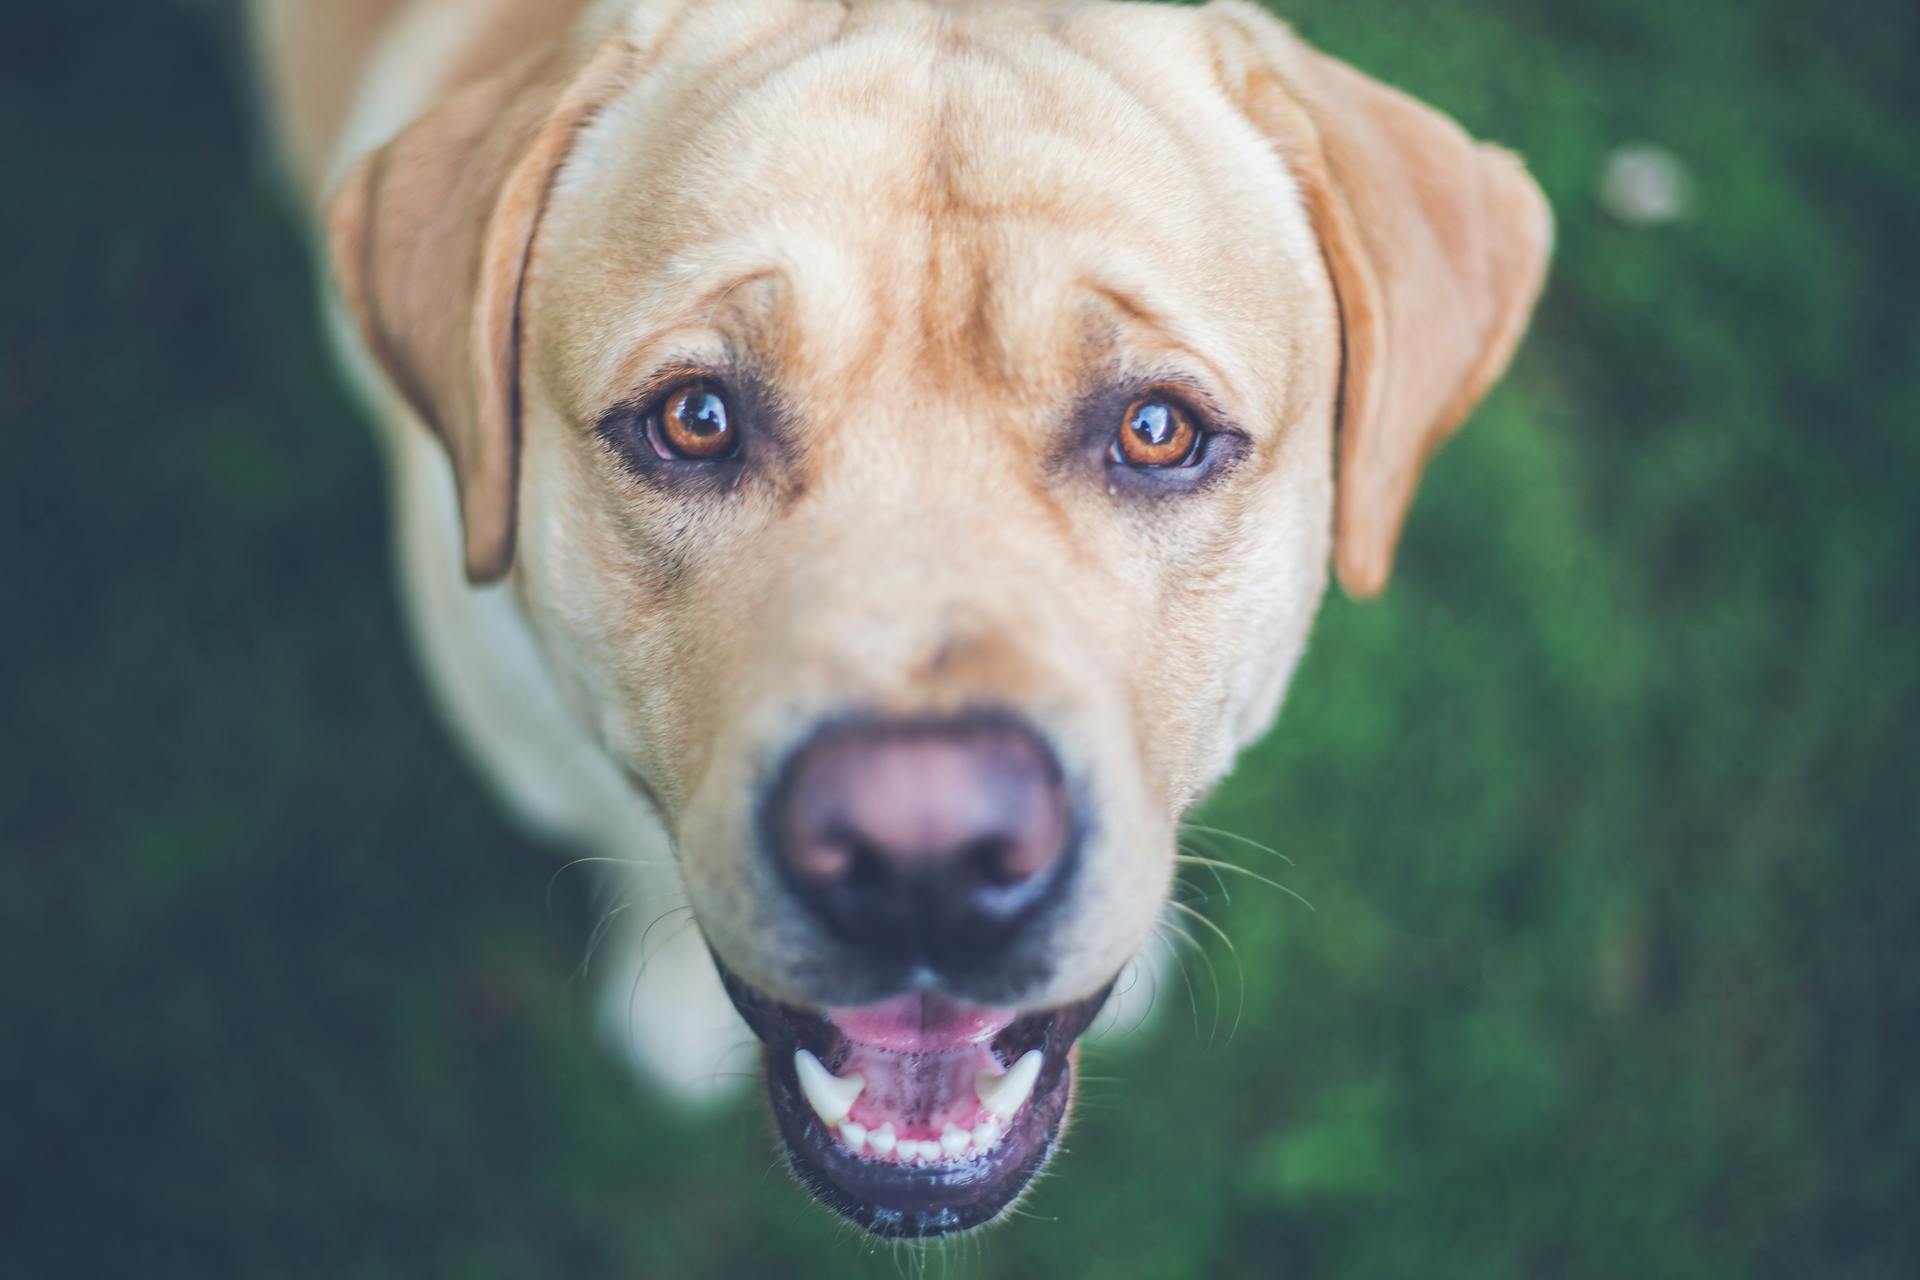 A Labrador dog | Source: Pexels